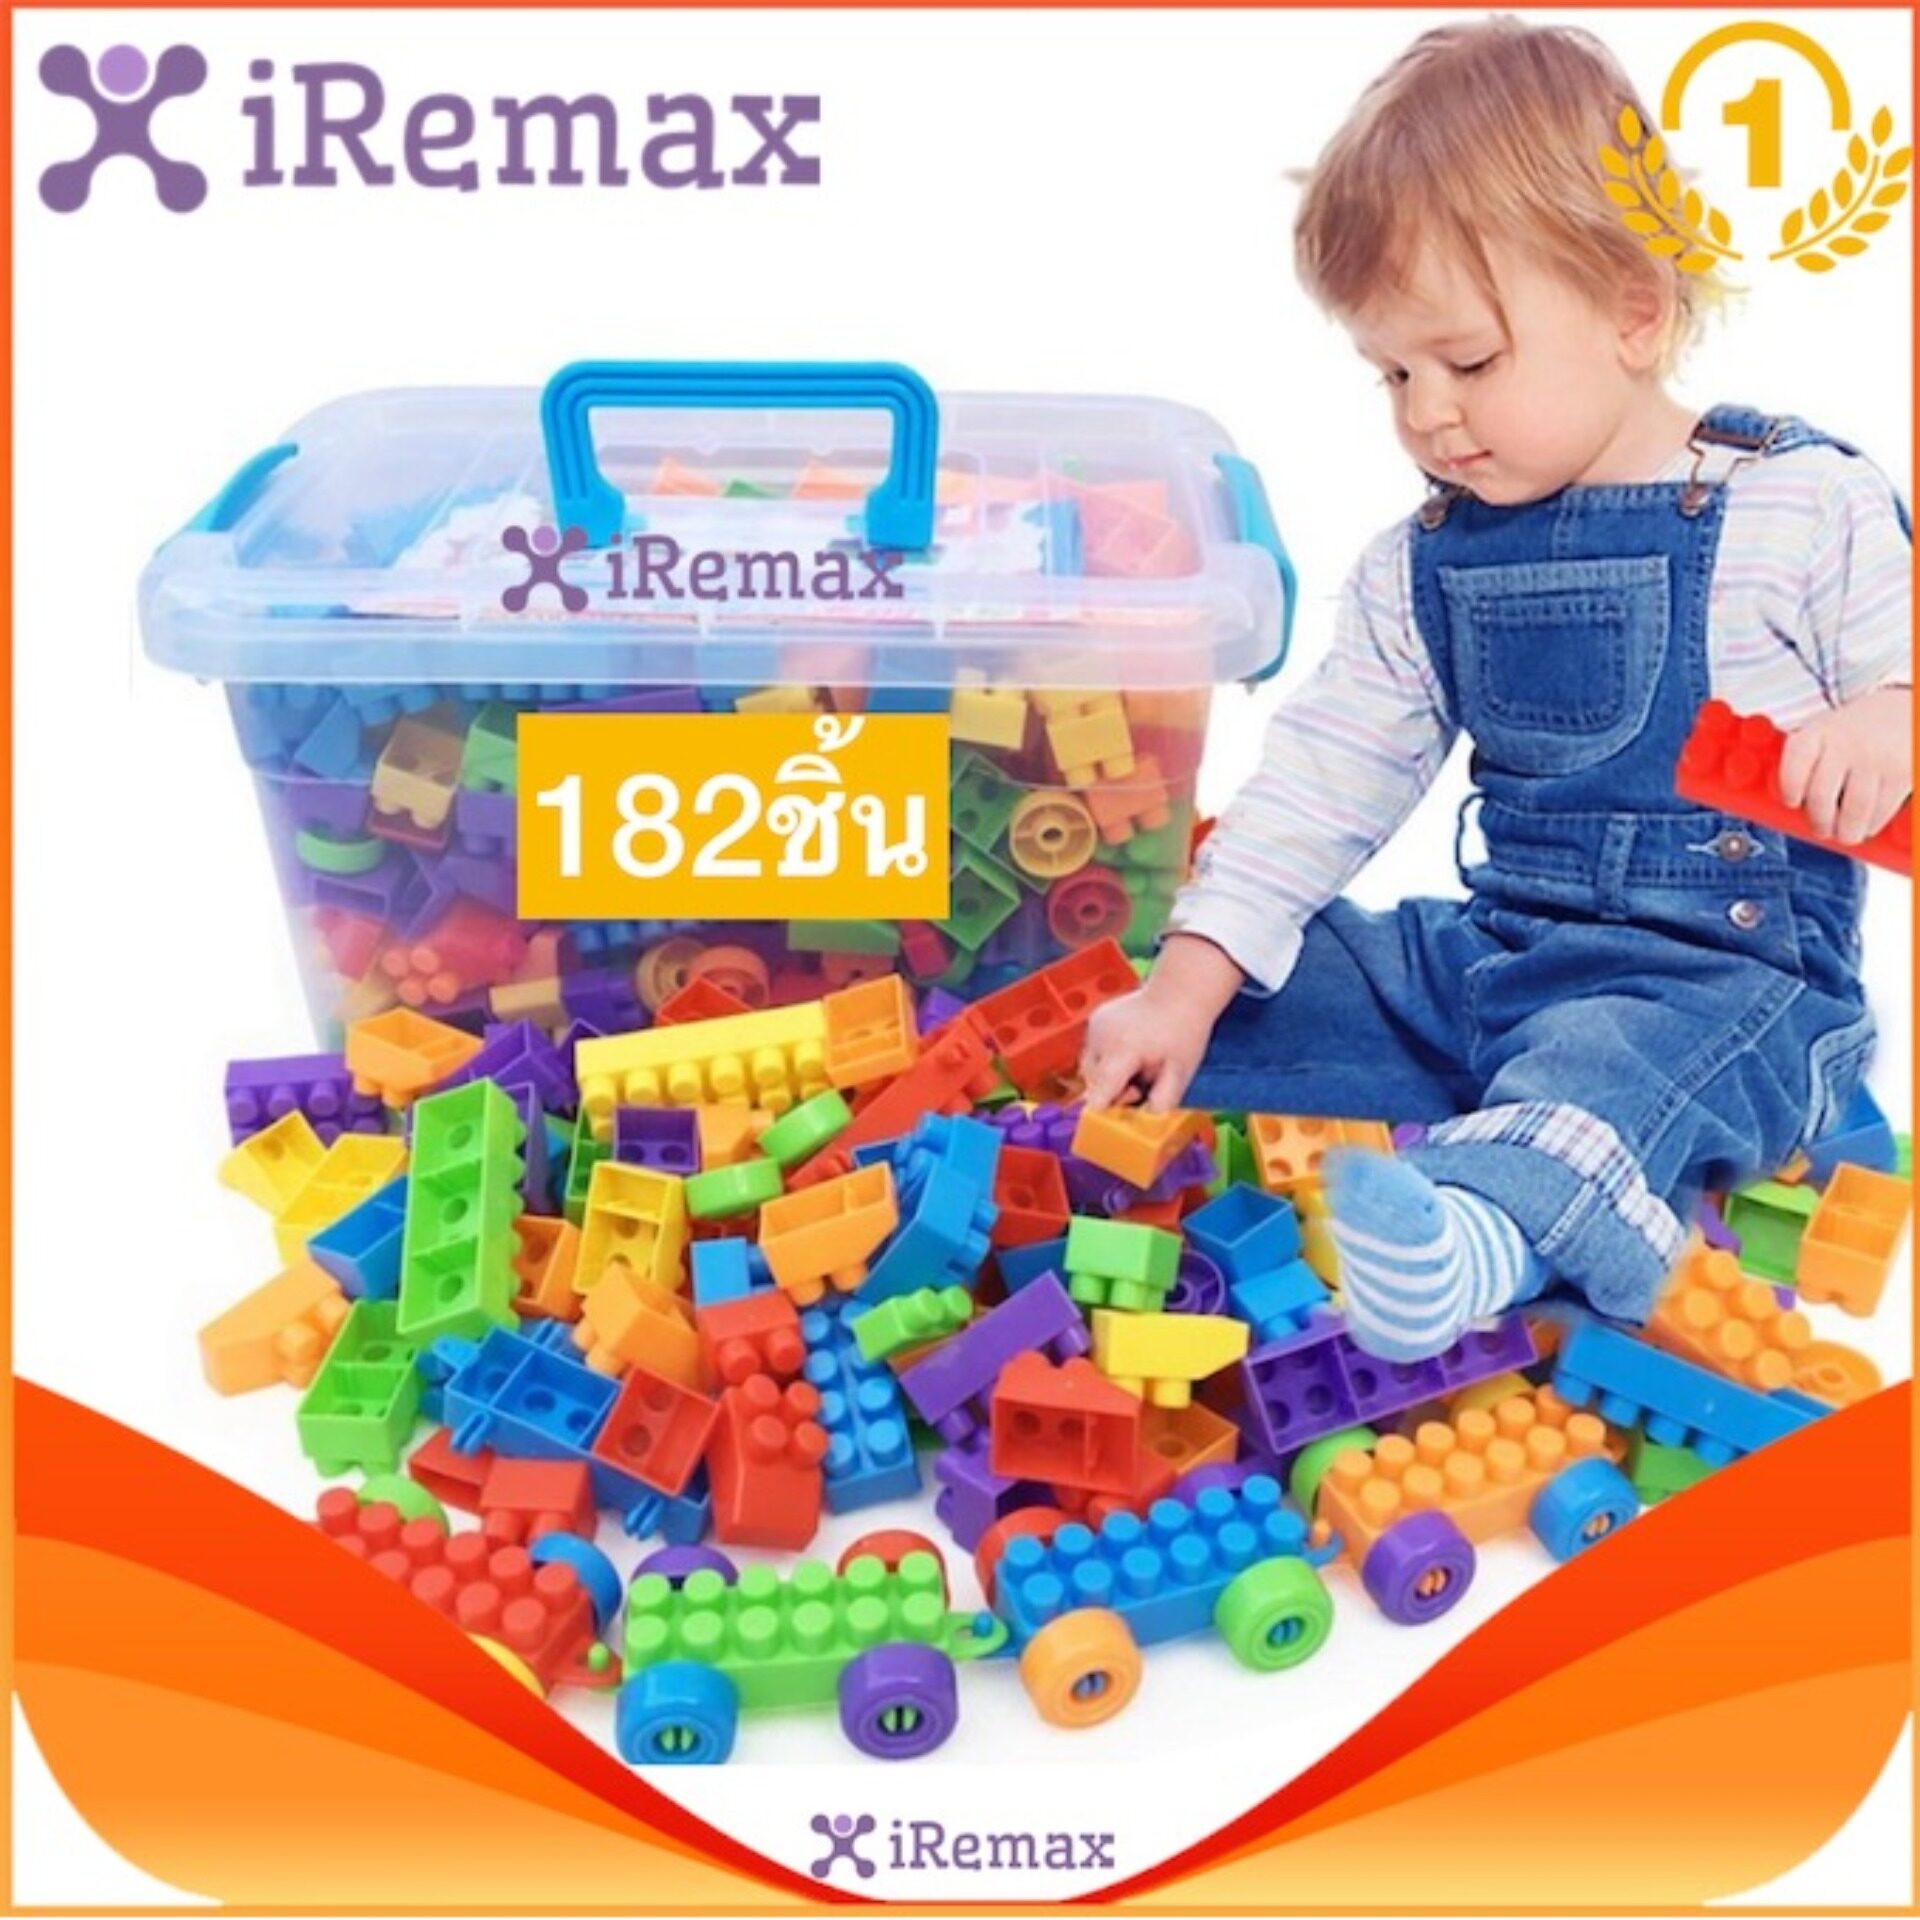 XXZ Shop จัดส่งที่รวดเร็ว good iRemax Building Sets บล็อก Block ตัวต่อ Free Exquisite album (ไม่มีกล่อง) ตัวต่อเหมาะสำหรับเด็กอายุ 2 ขวบขึ้นไป